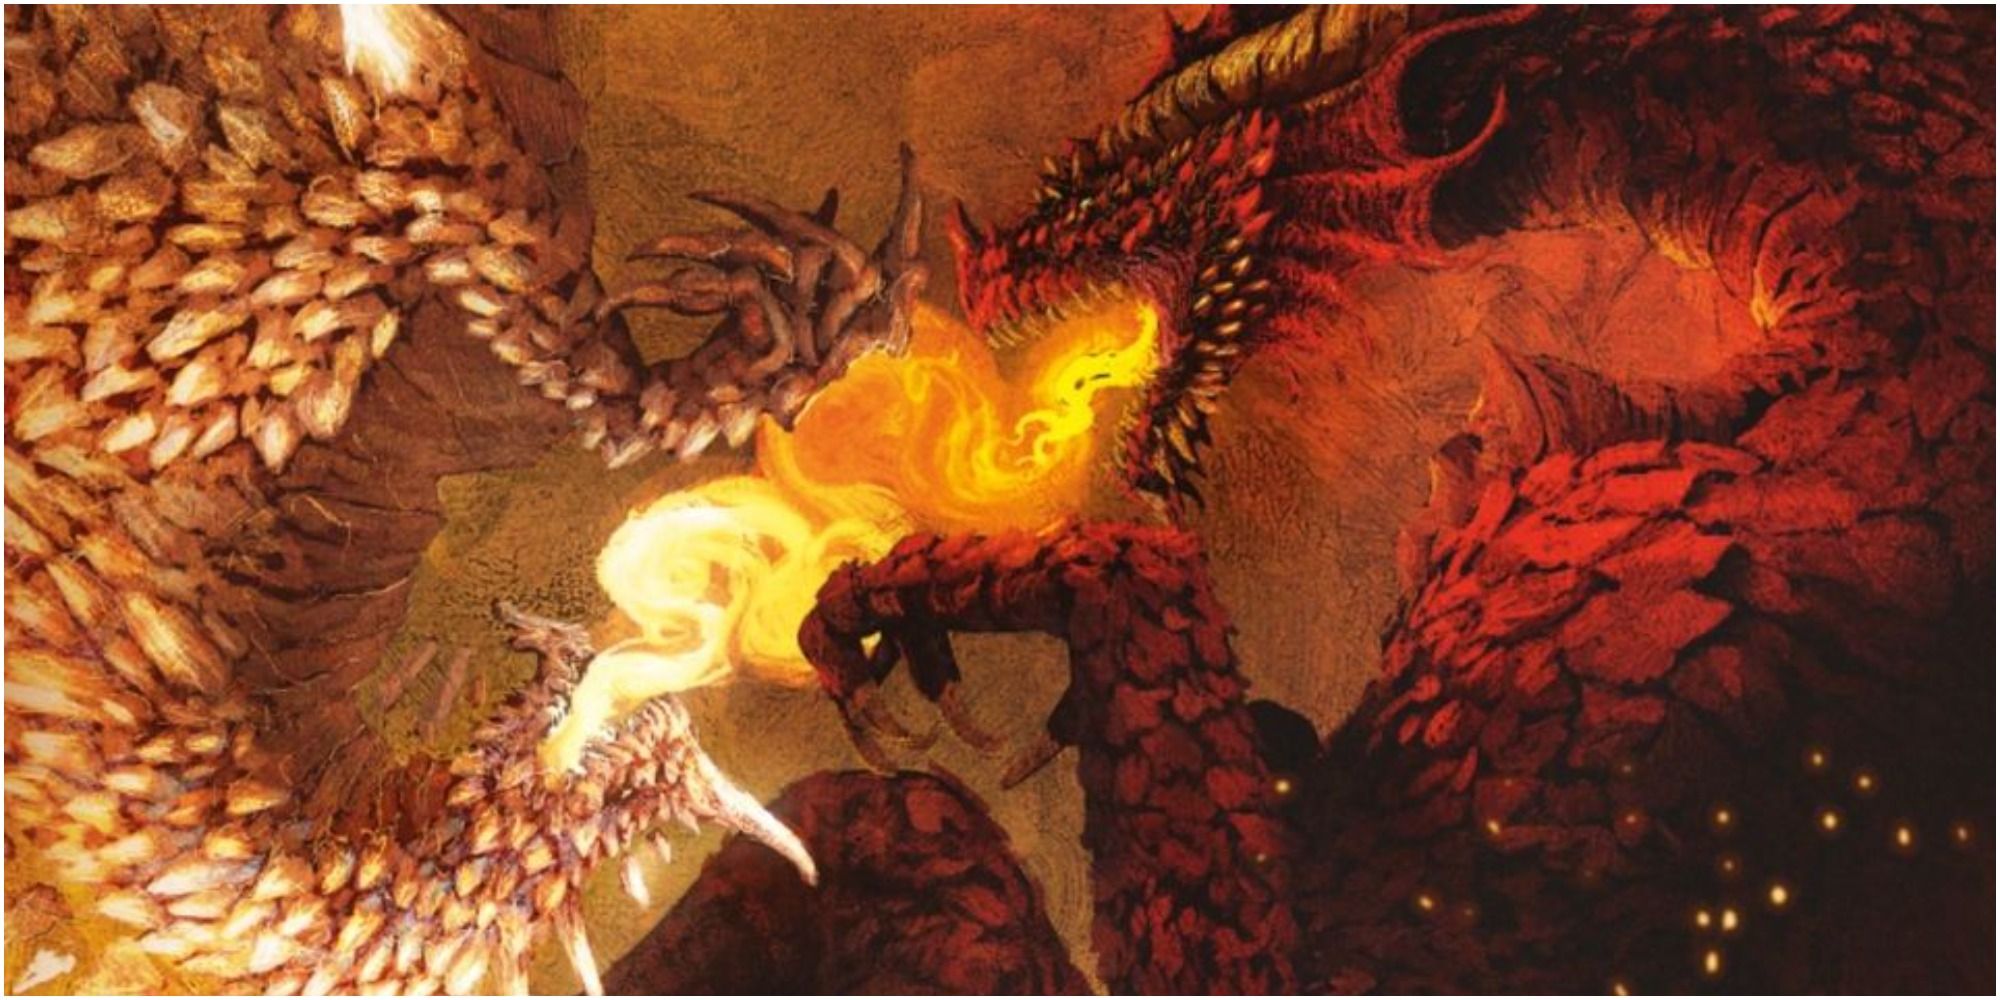 fizban's treasury of dragons alternate cover